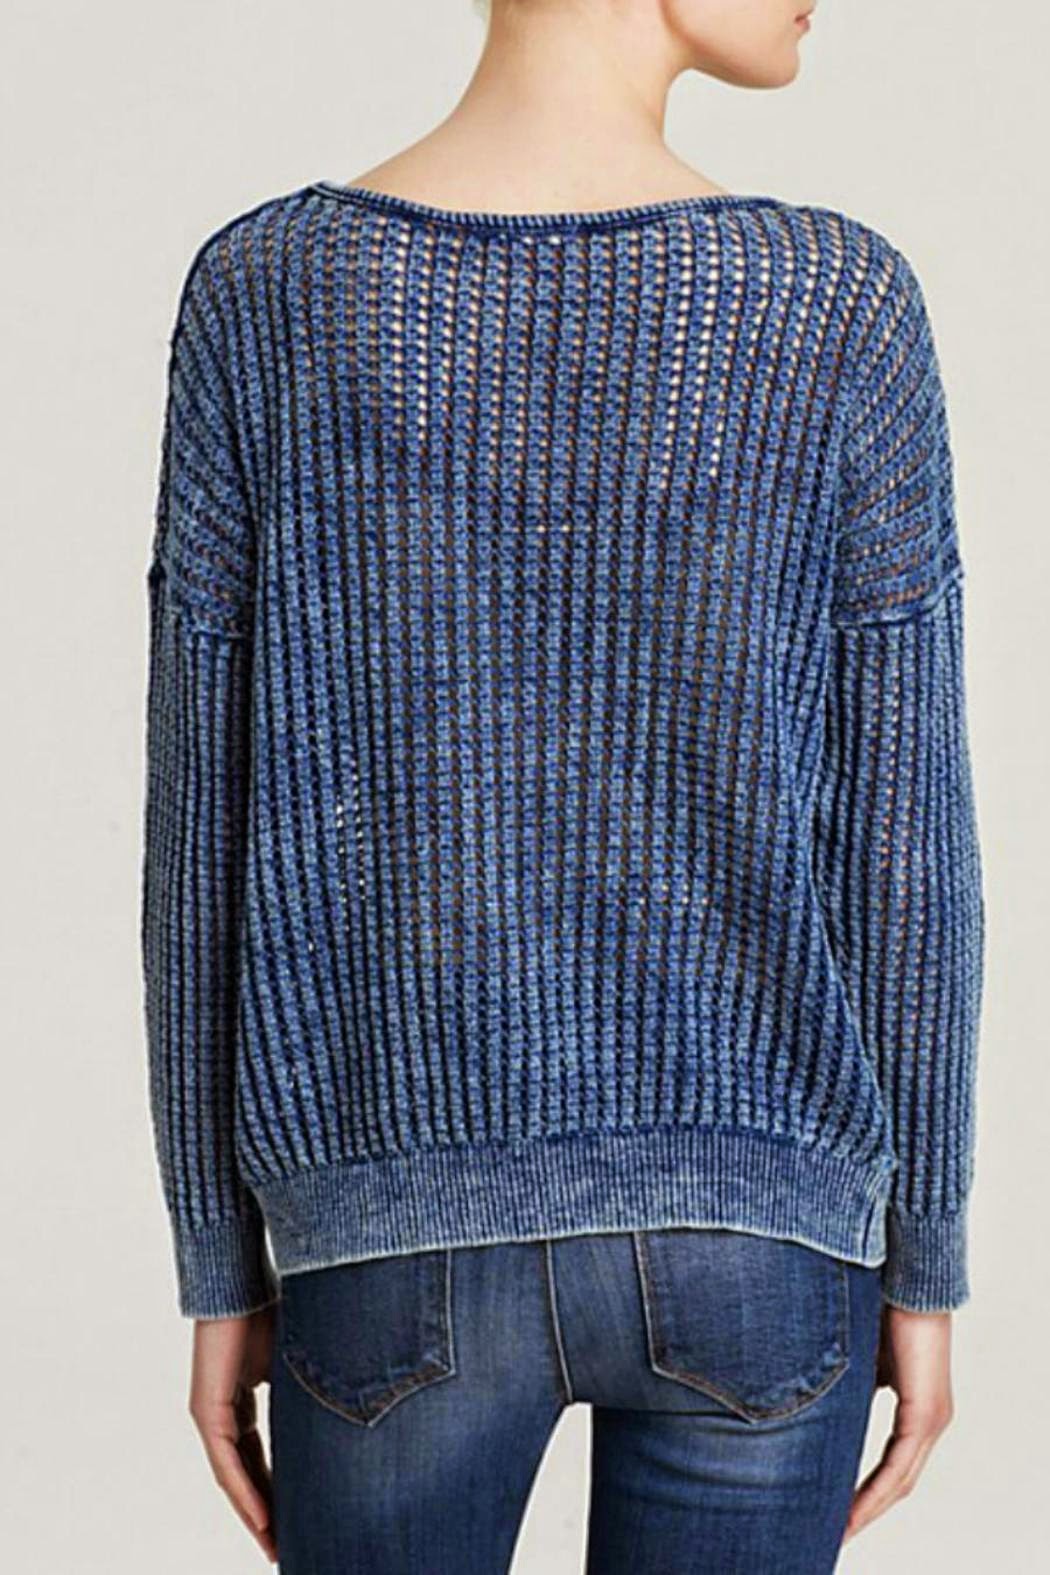 Fashion Scoop: Bella Dahl sweater!